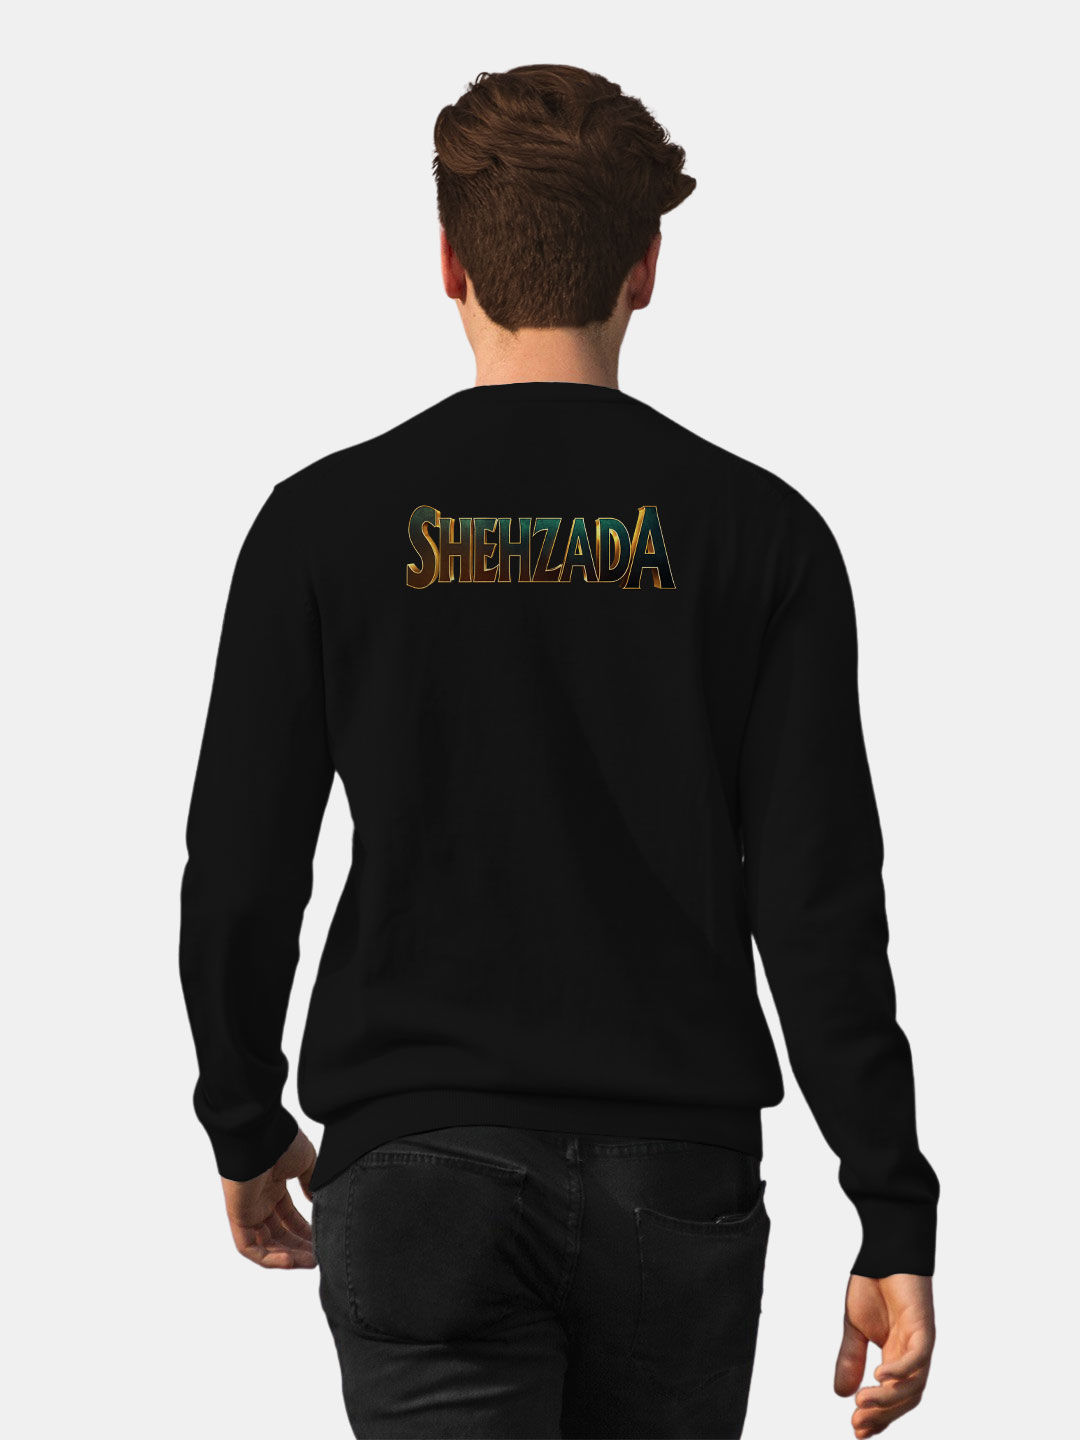 Crown - Mens Designer Sweatshirt